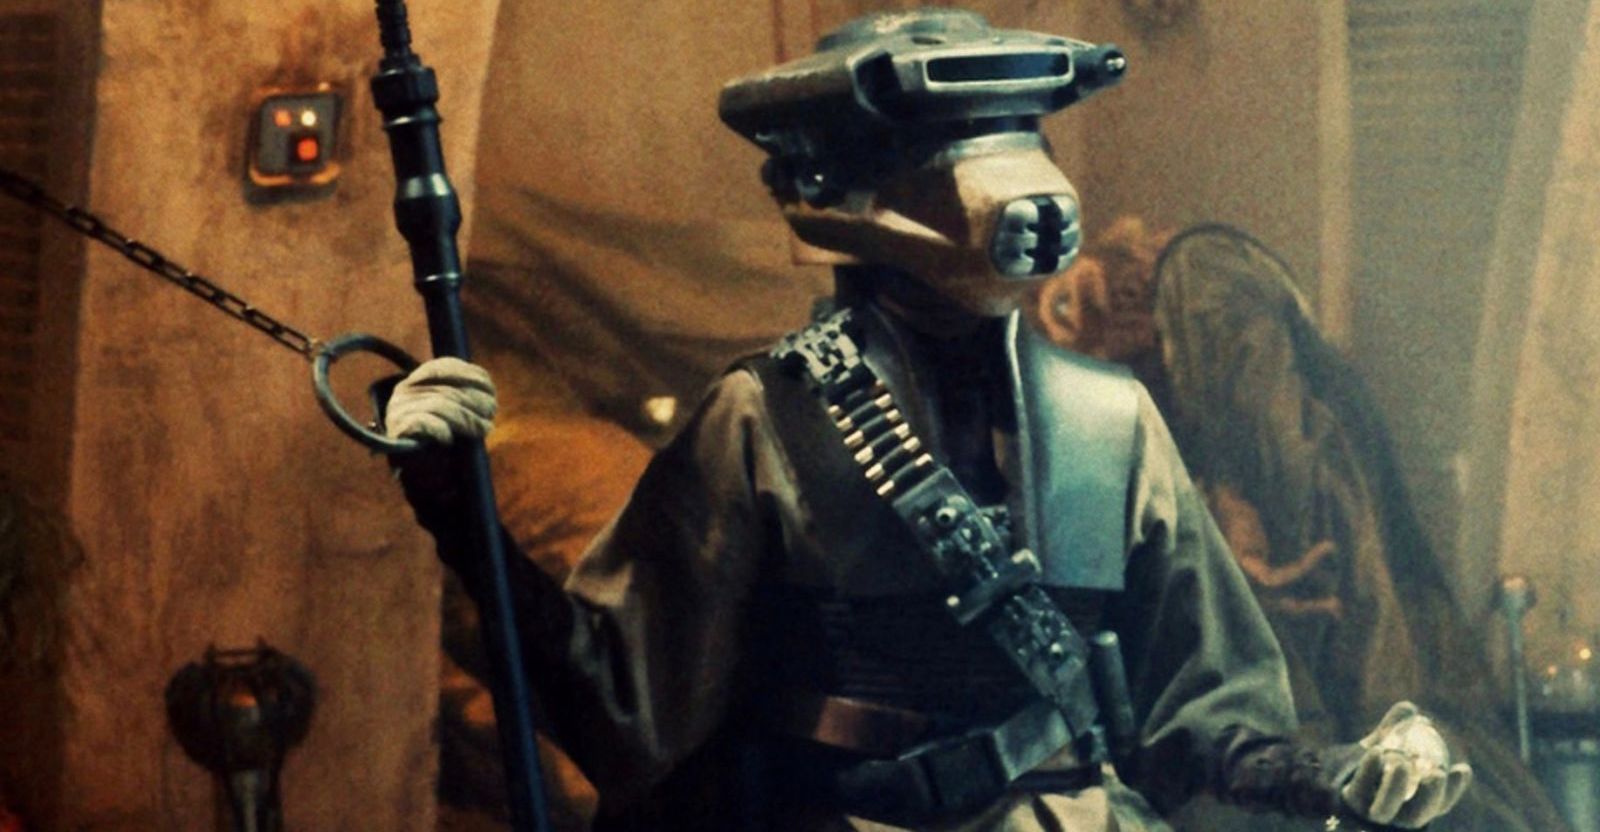 Star Wars Leia bounty hunter disguise